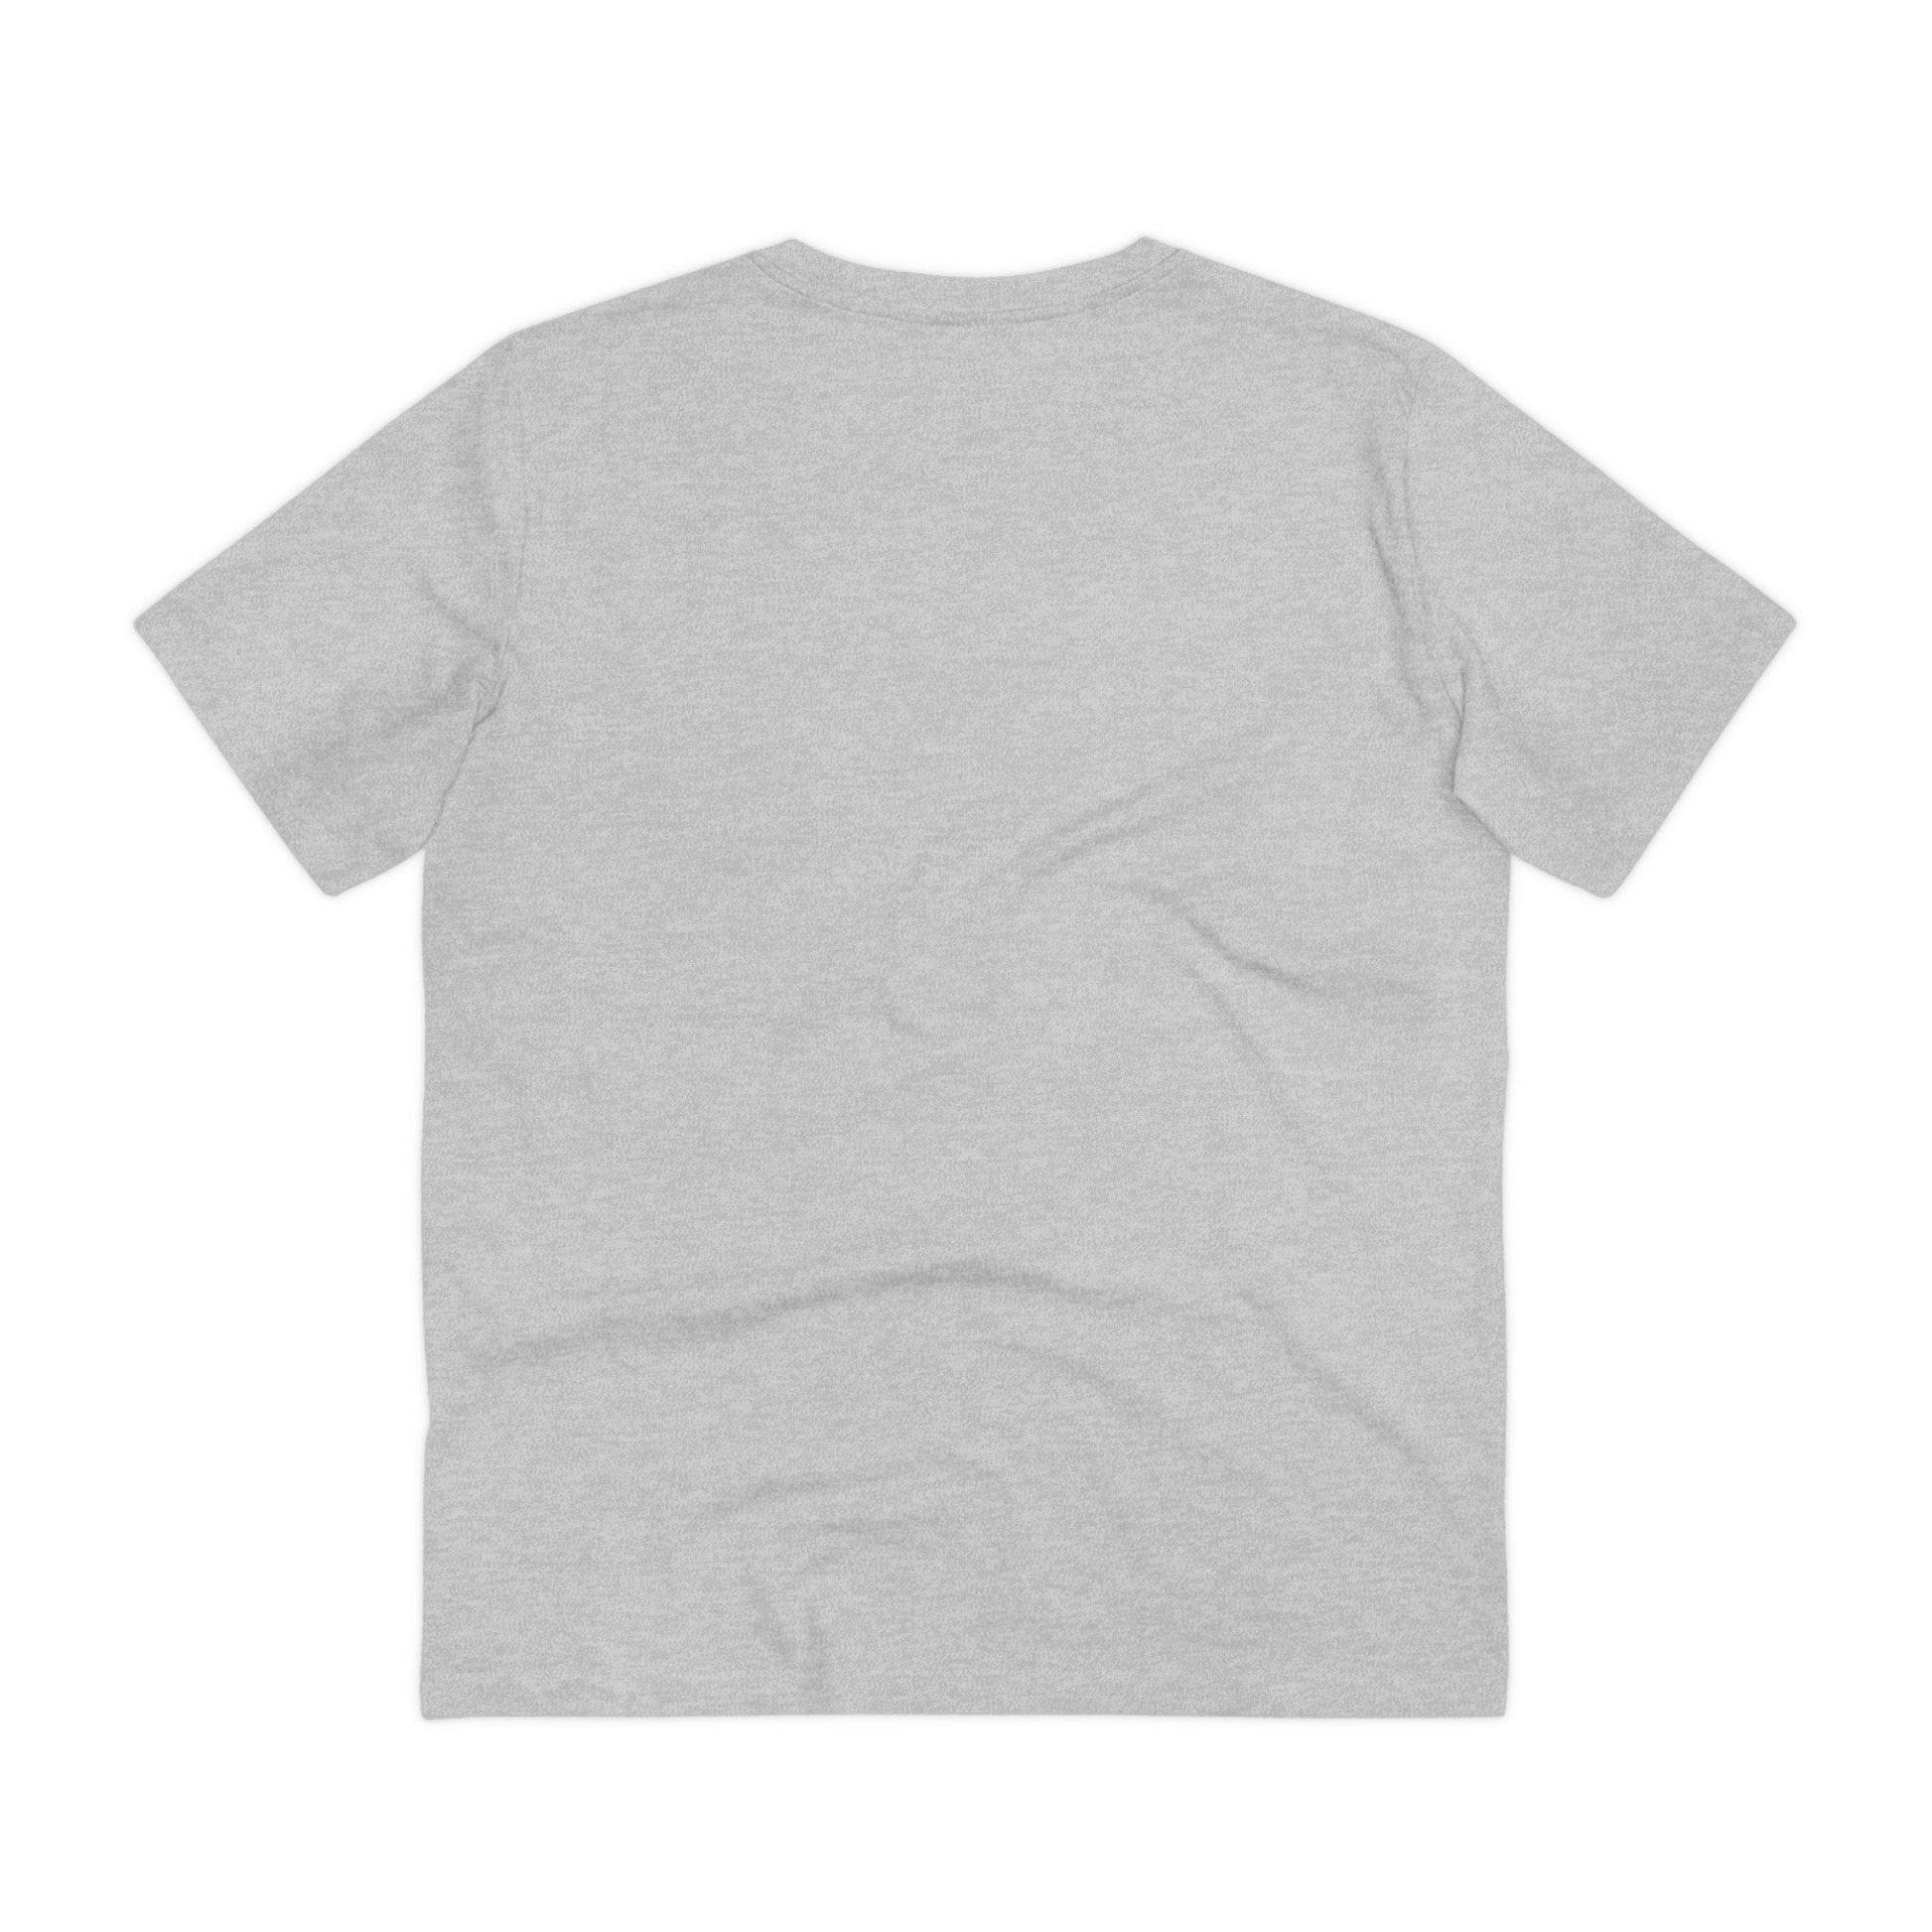 Printify T-Shirt Always Innocent - Streetwear - King Breaker - Front Design